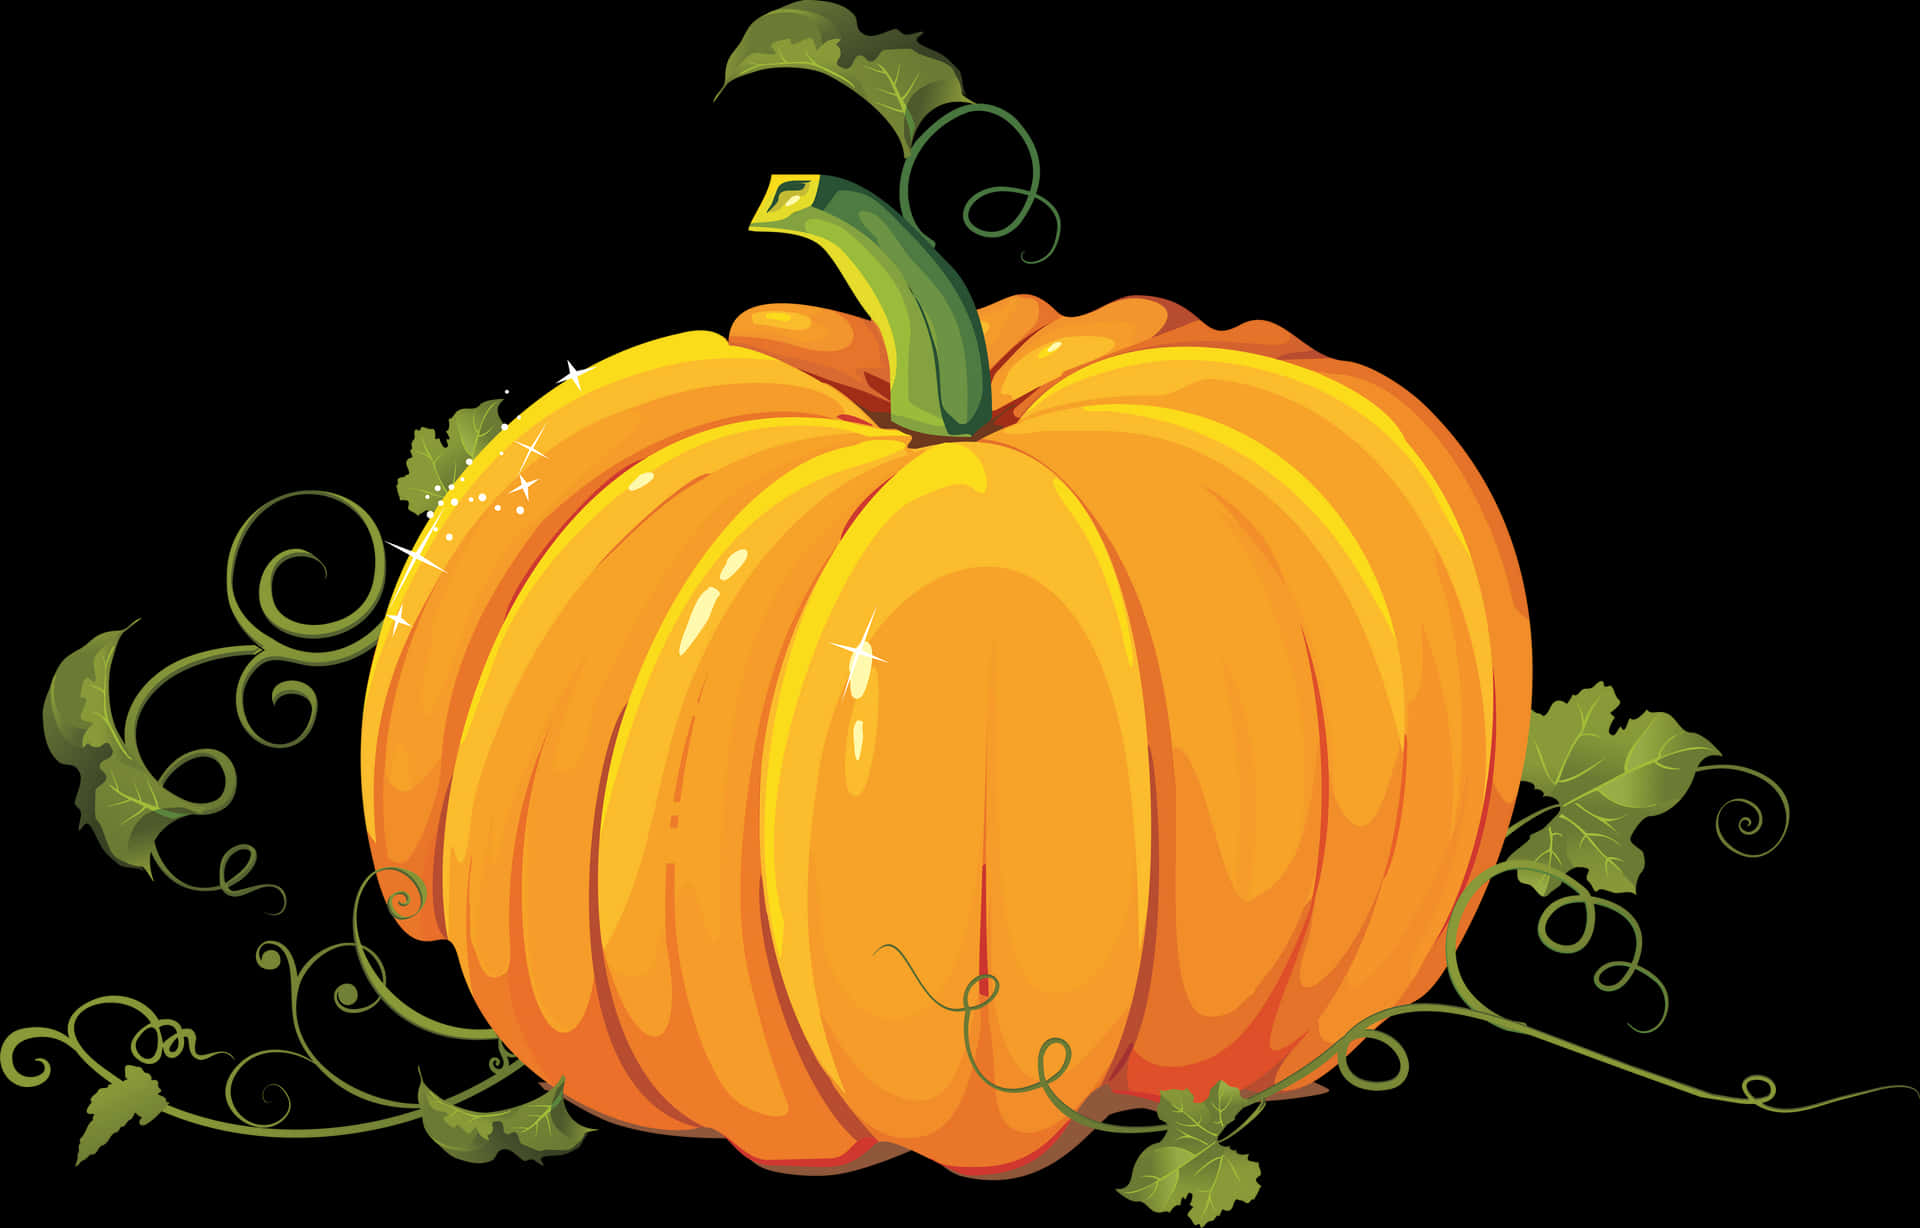 Glowing Pumpkin Illustration PNG image